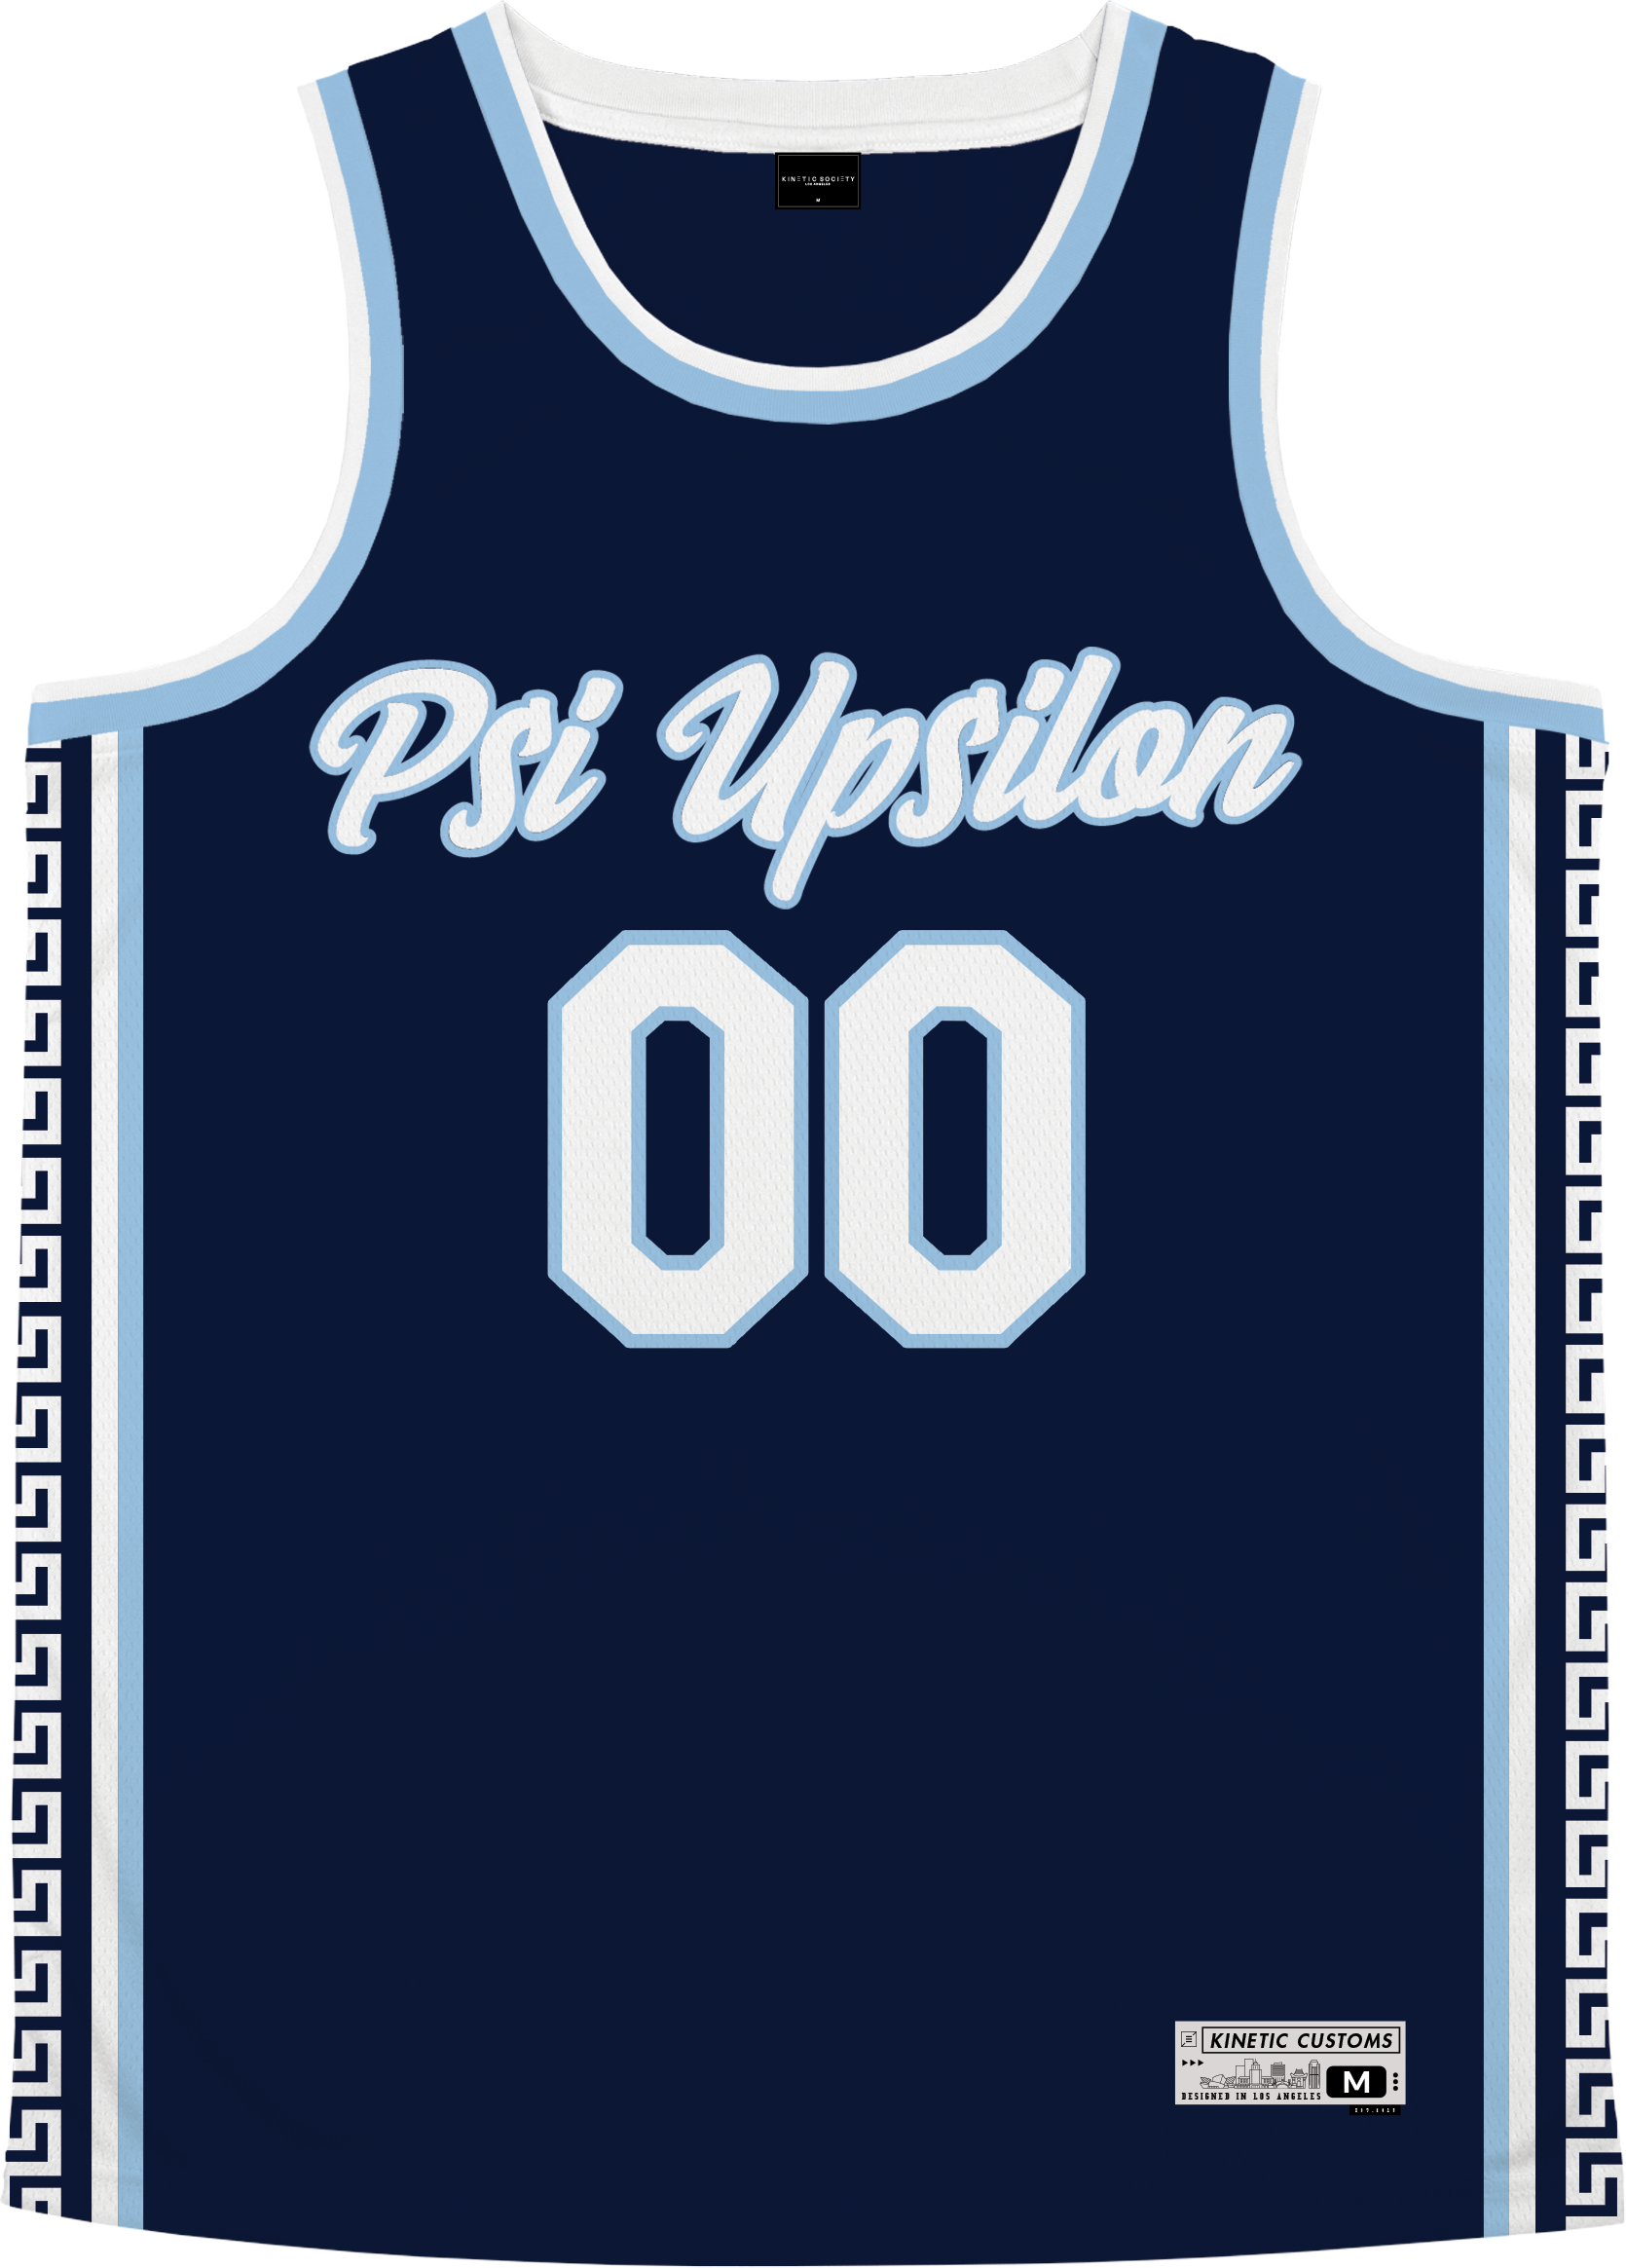 Psi Upsilon - Templar Basketball Jersey - Kinetic Society